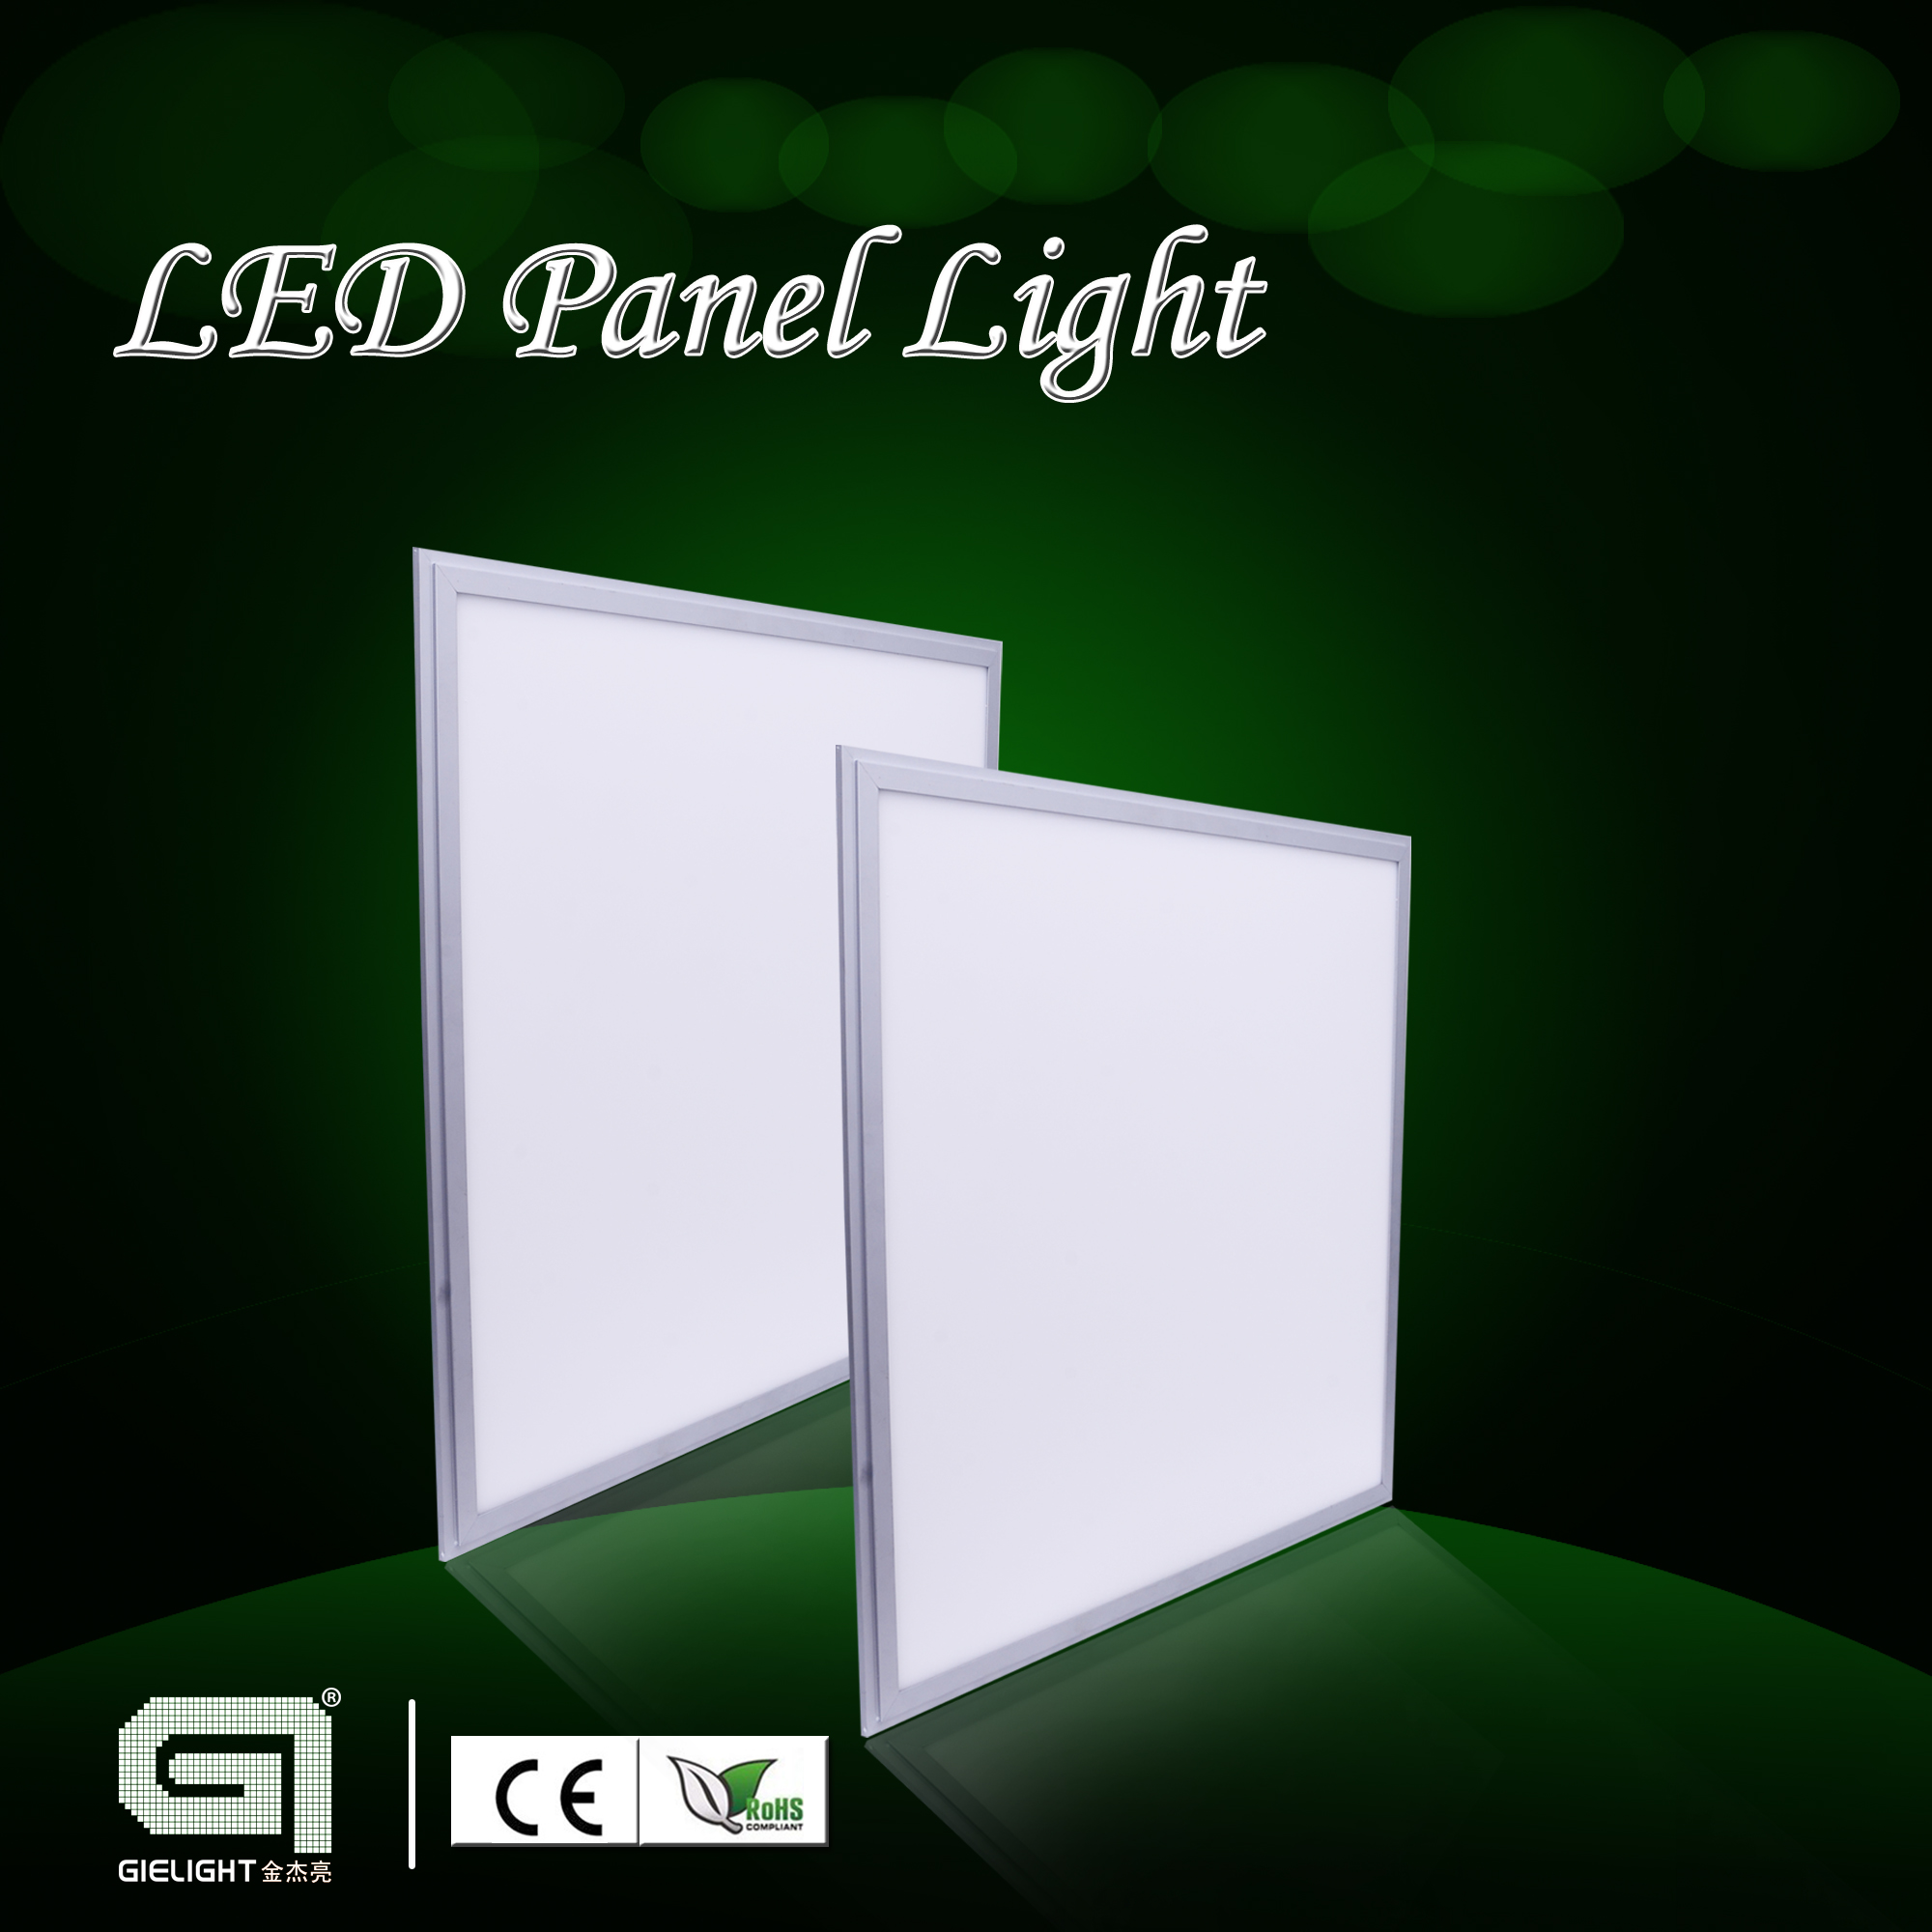 Top sales $22.5 promotional led light panel 60*60cm 36w office lighting, house lighting 